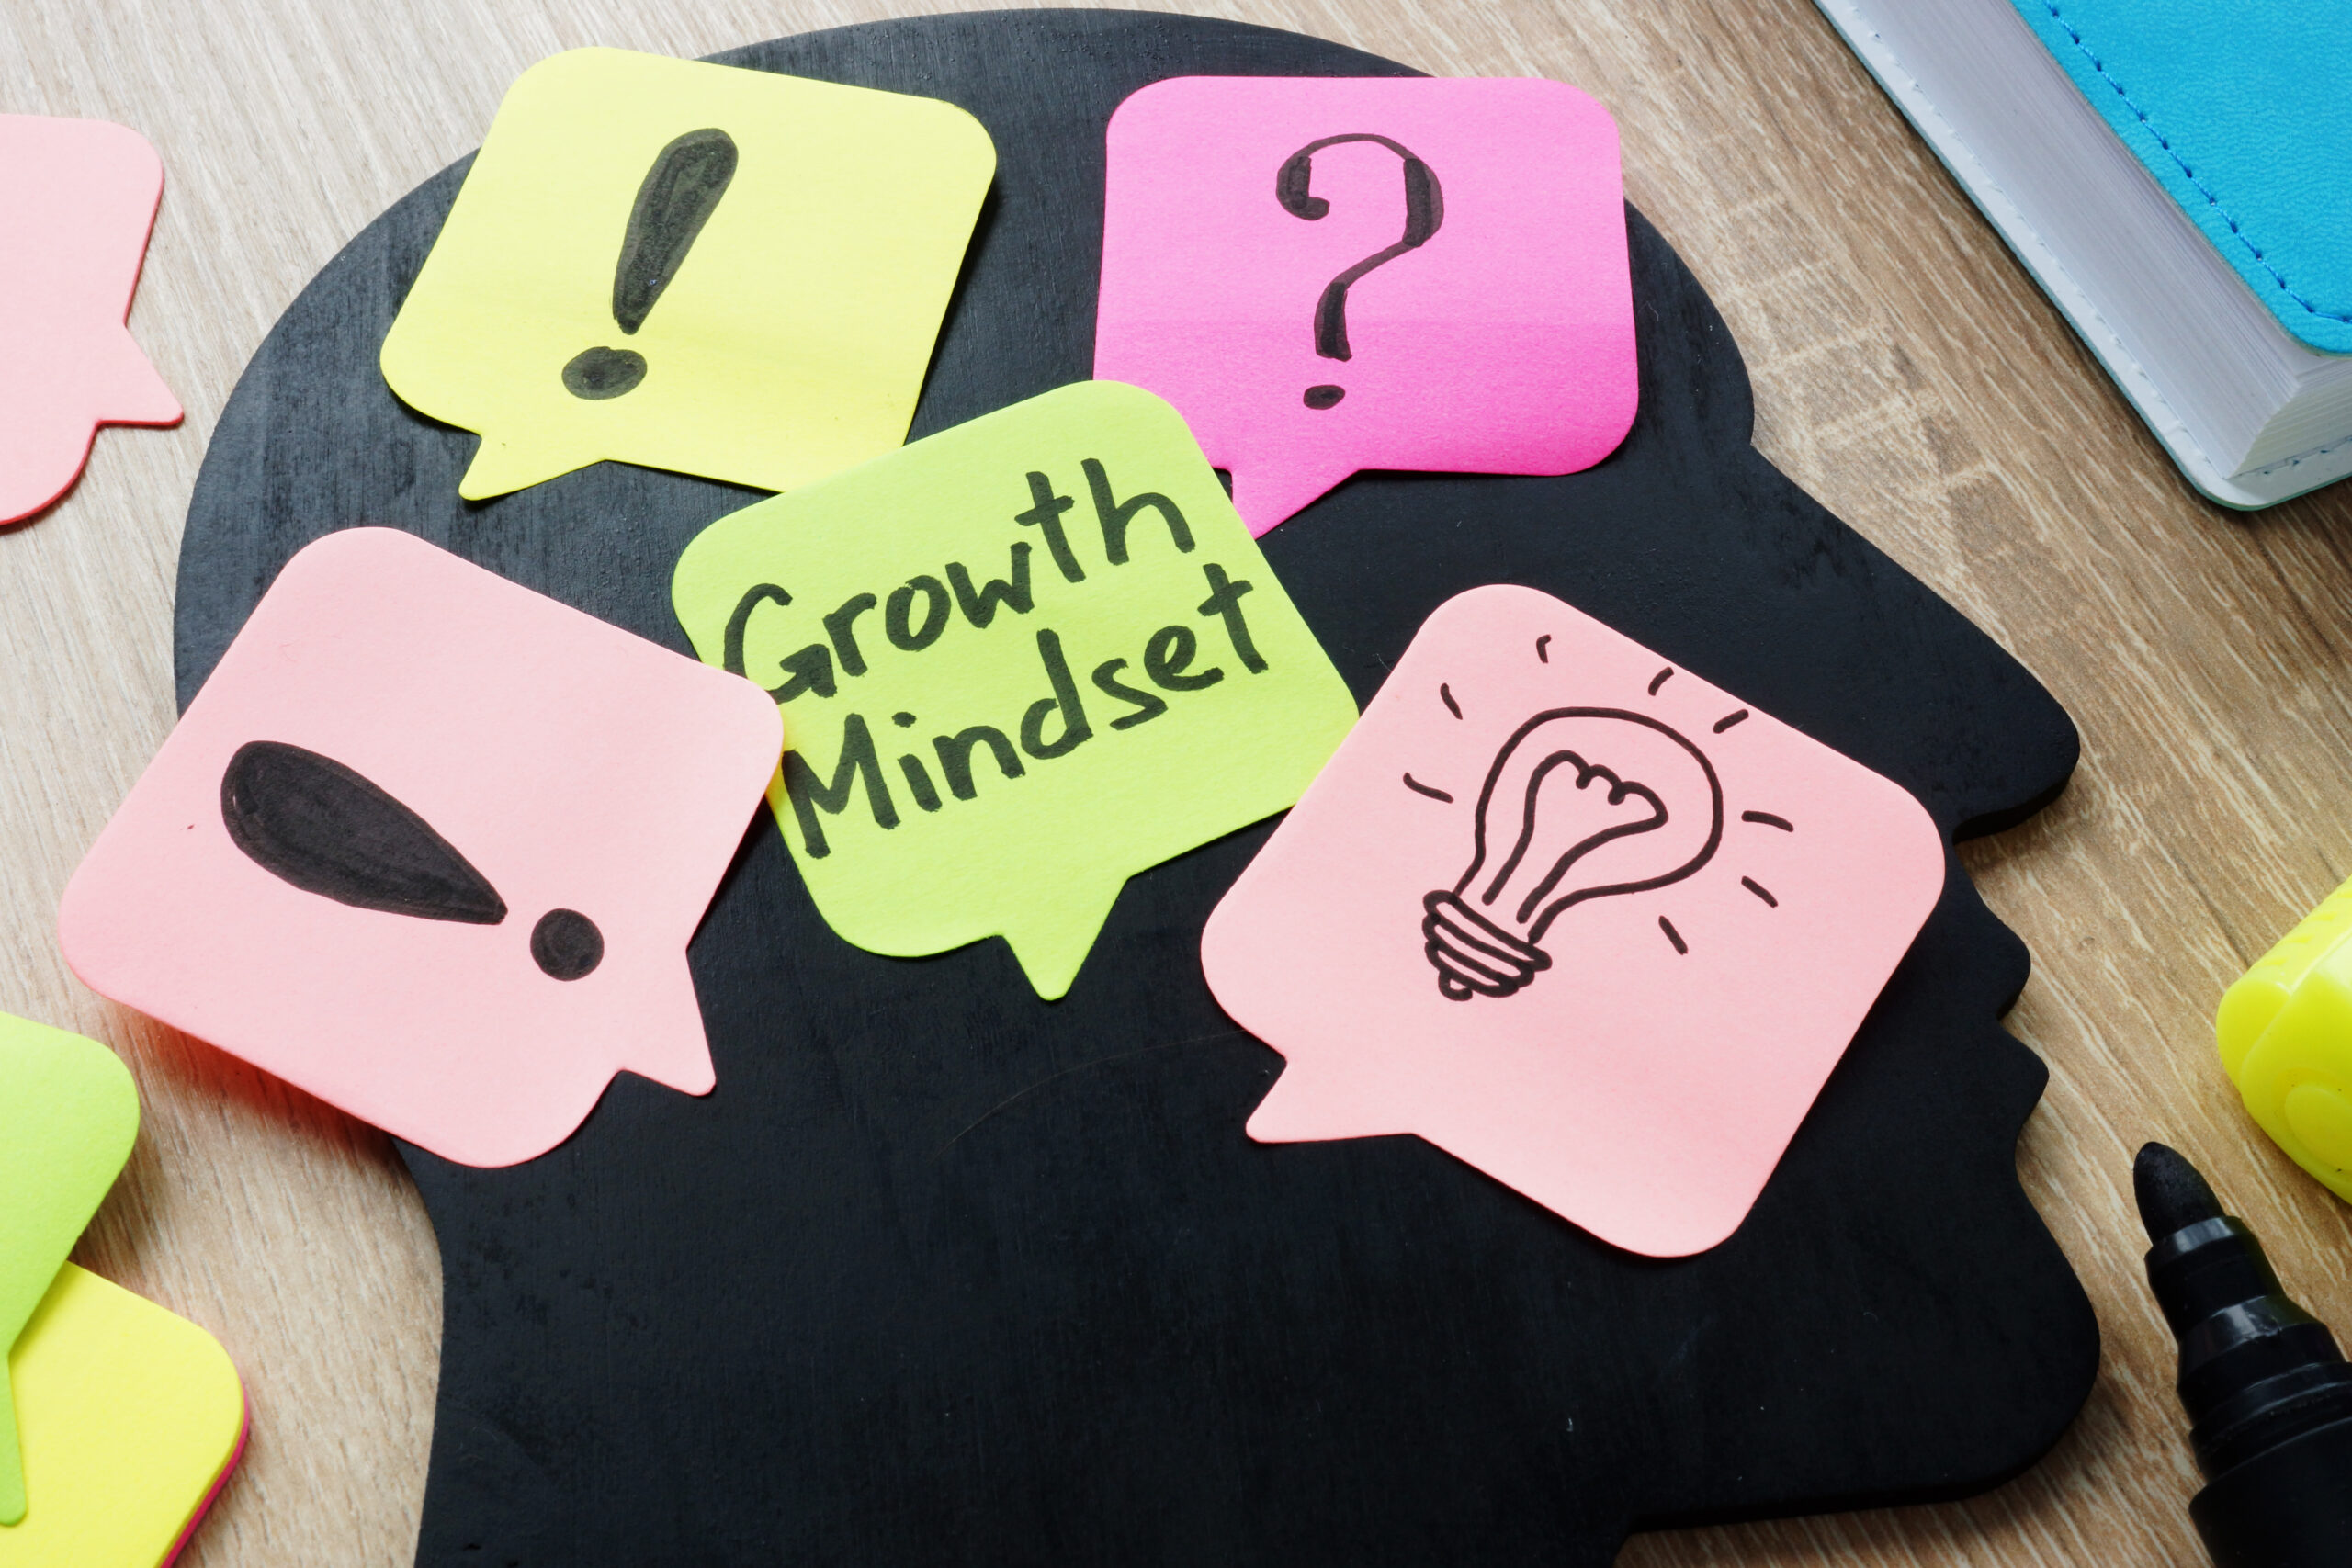 Growth mindset at work